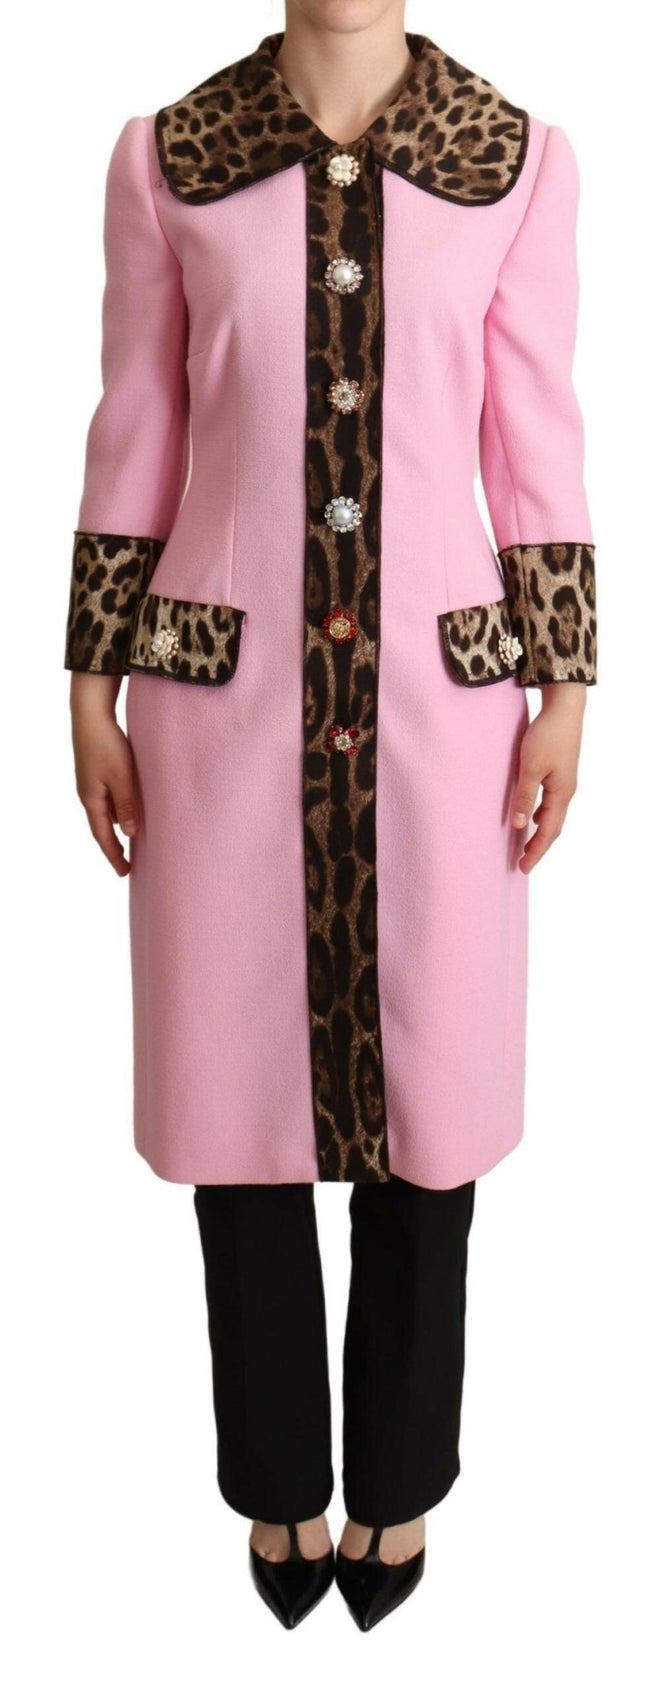 Dolce & Gabbana Pink Leopard Wool Trenchcoat Jacket - GENUINE AUTHENTIC BRAND LLC  